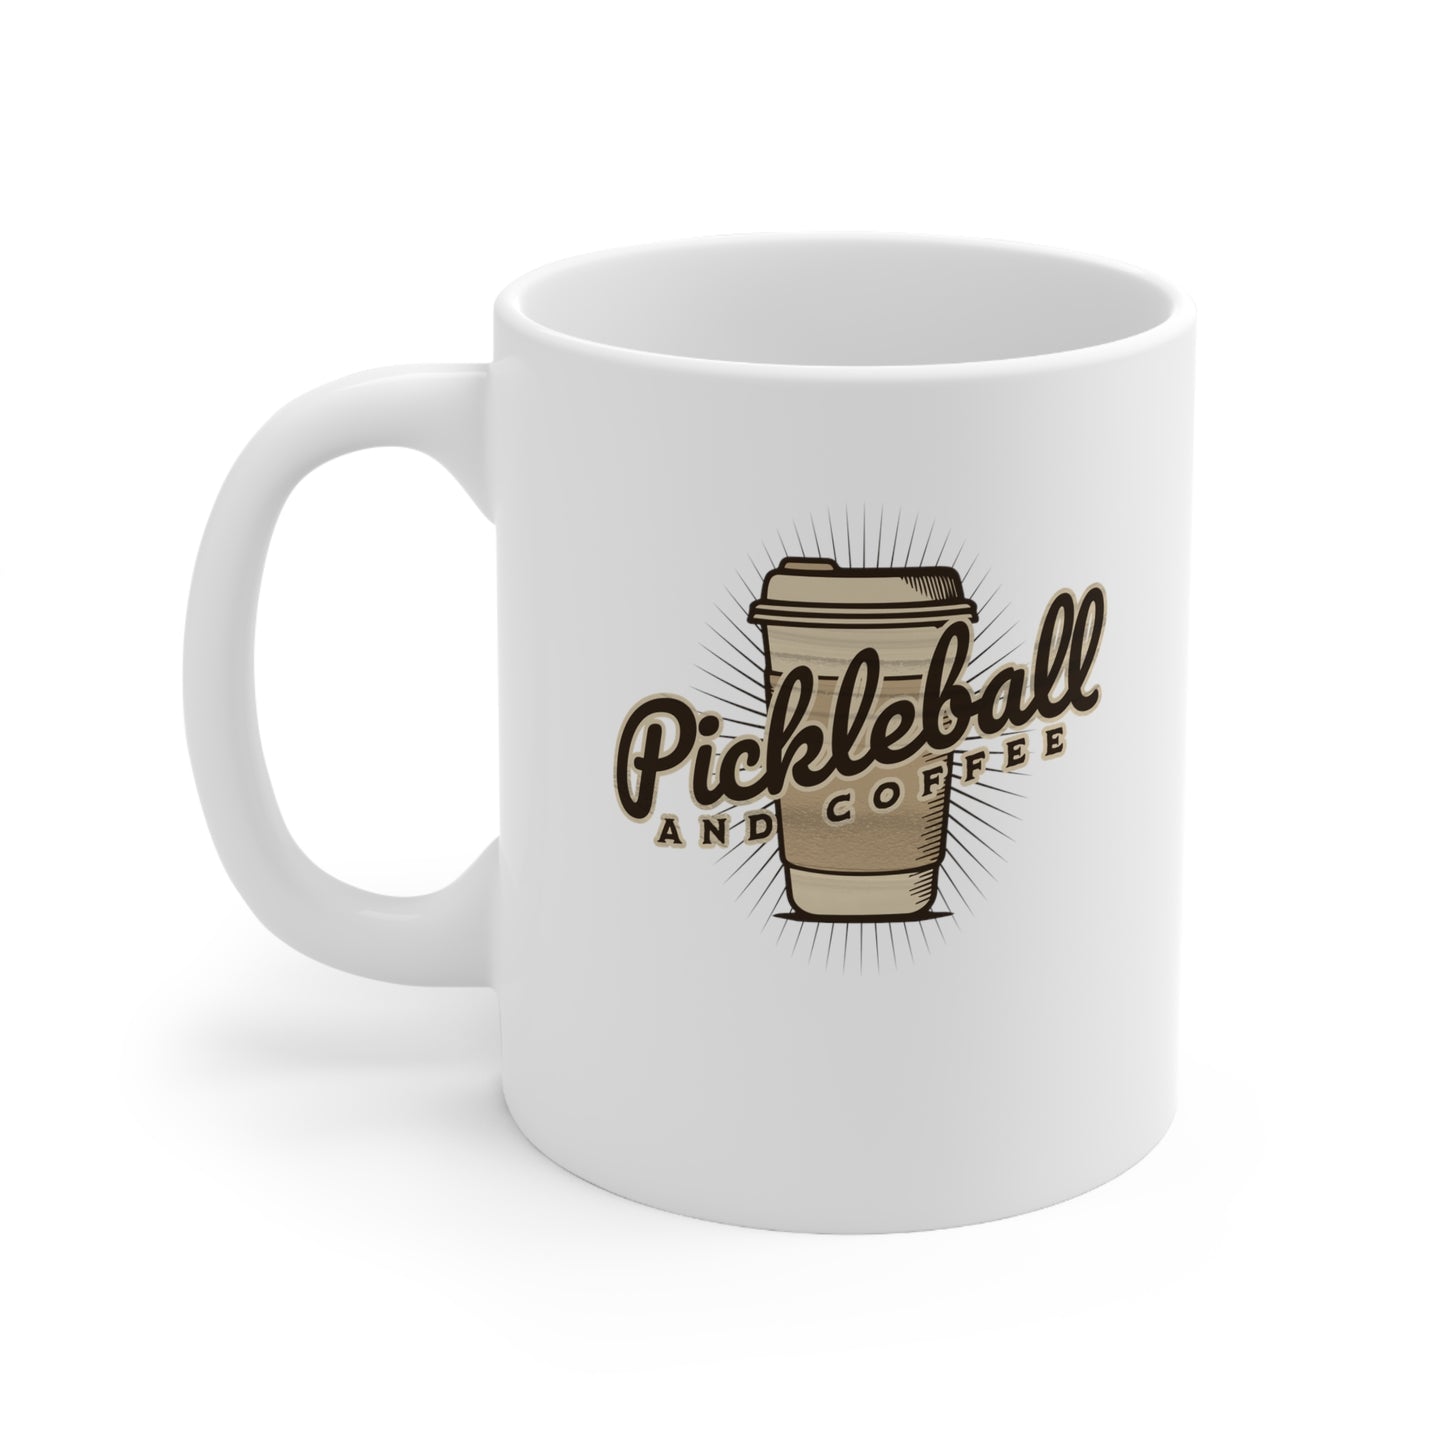 "Pickleball and Coffee" Mug for Pickleball Lovers